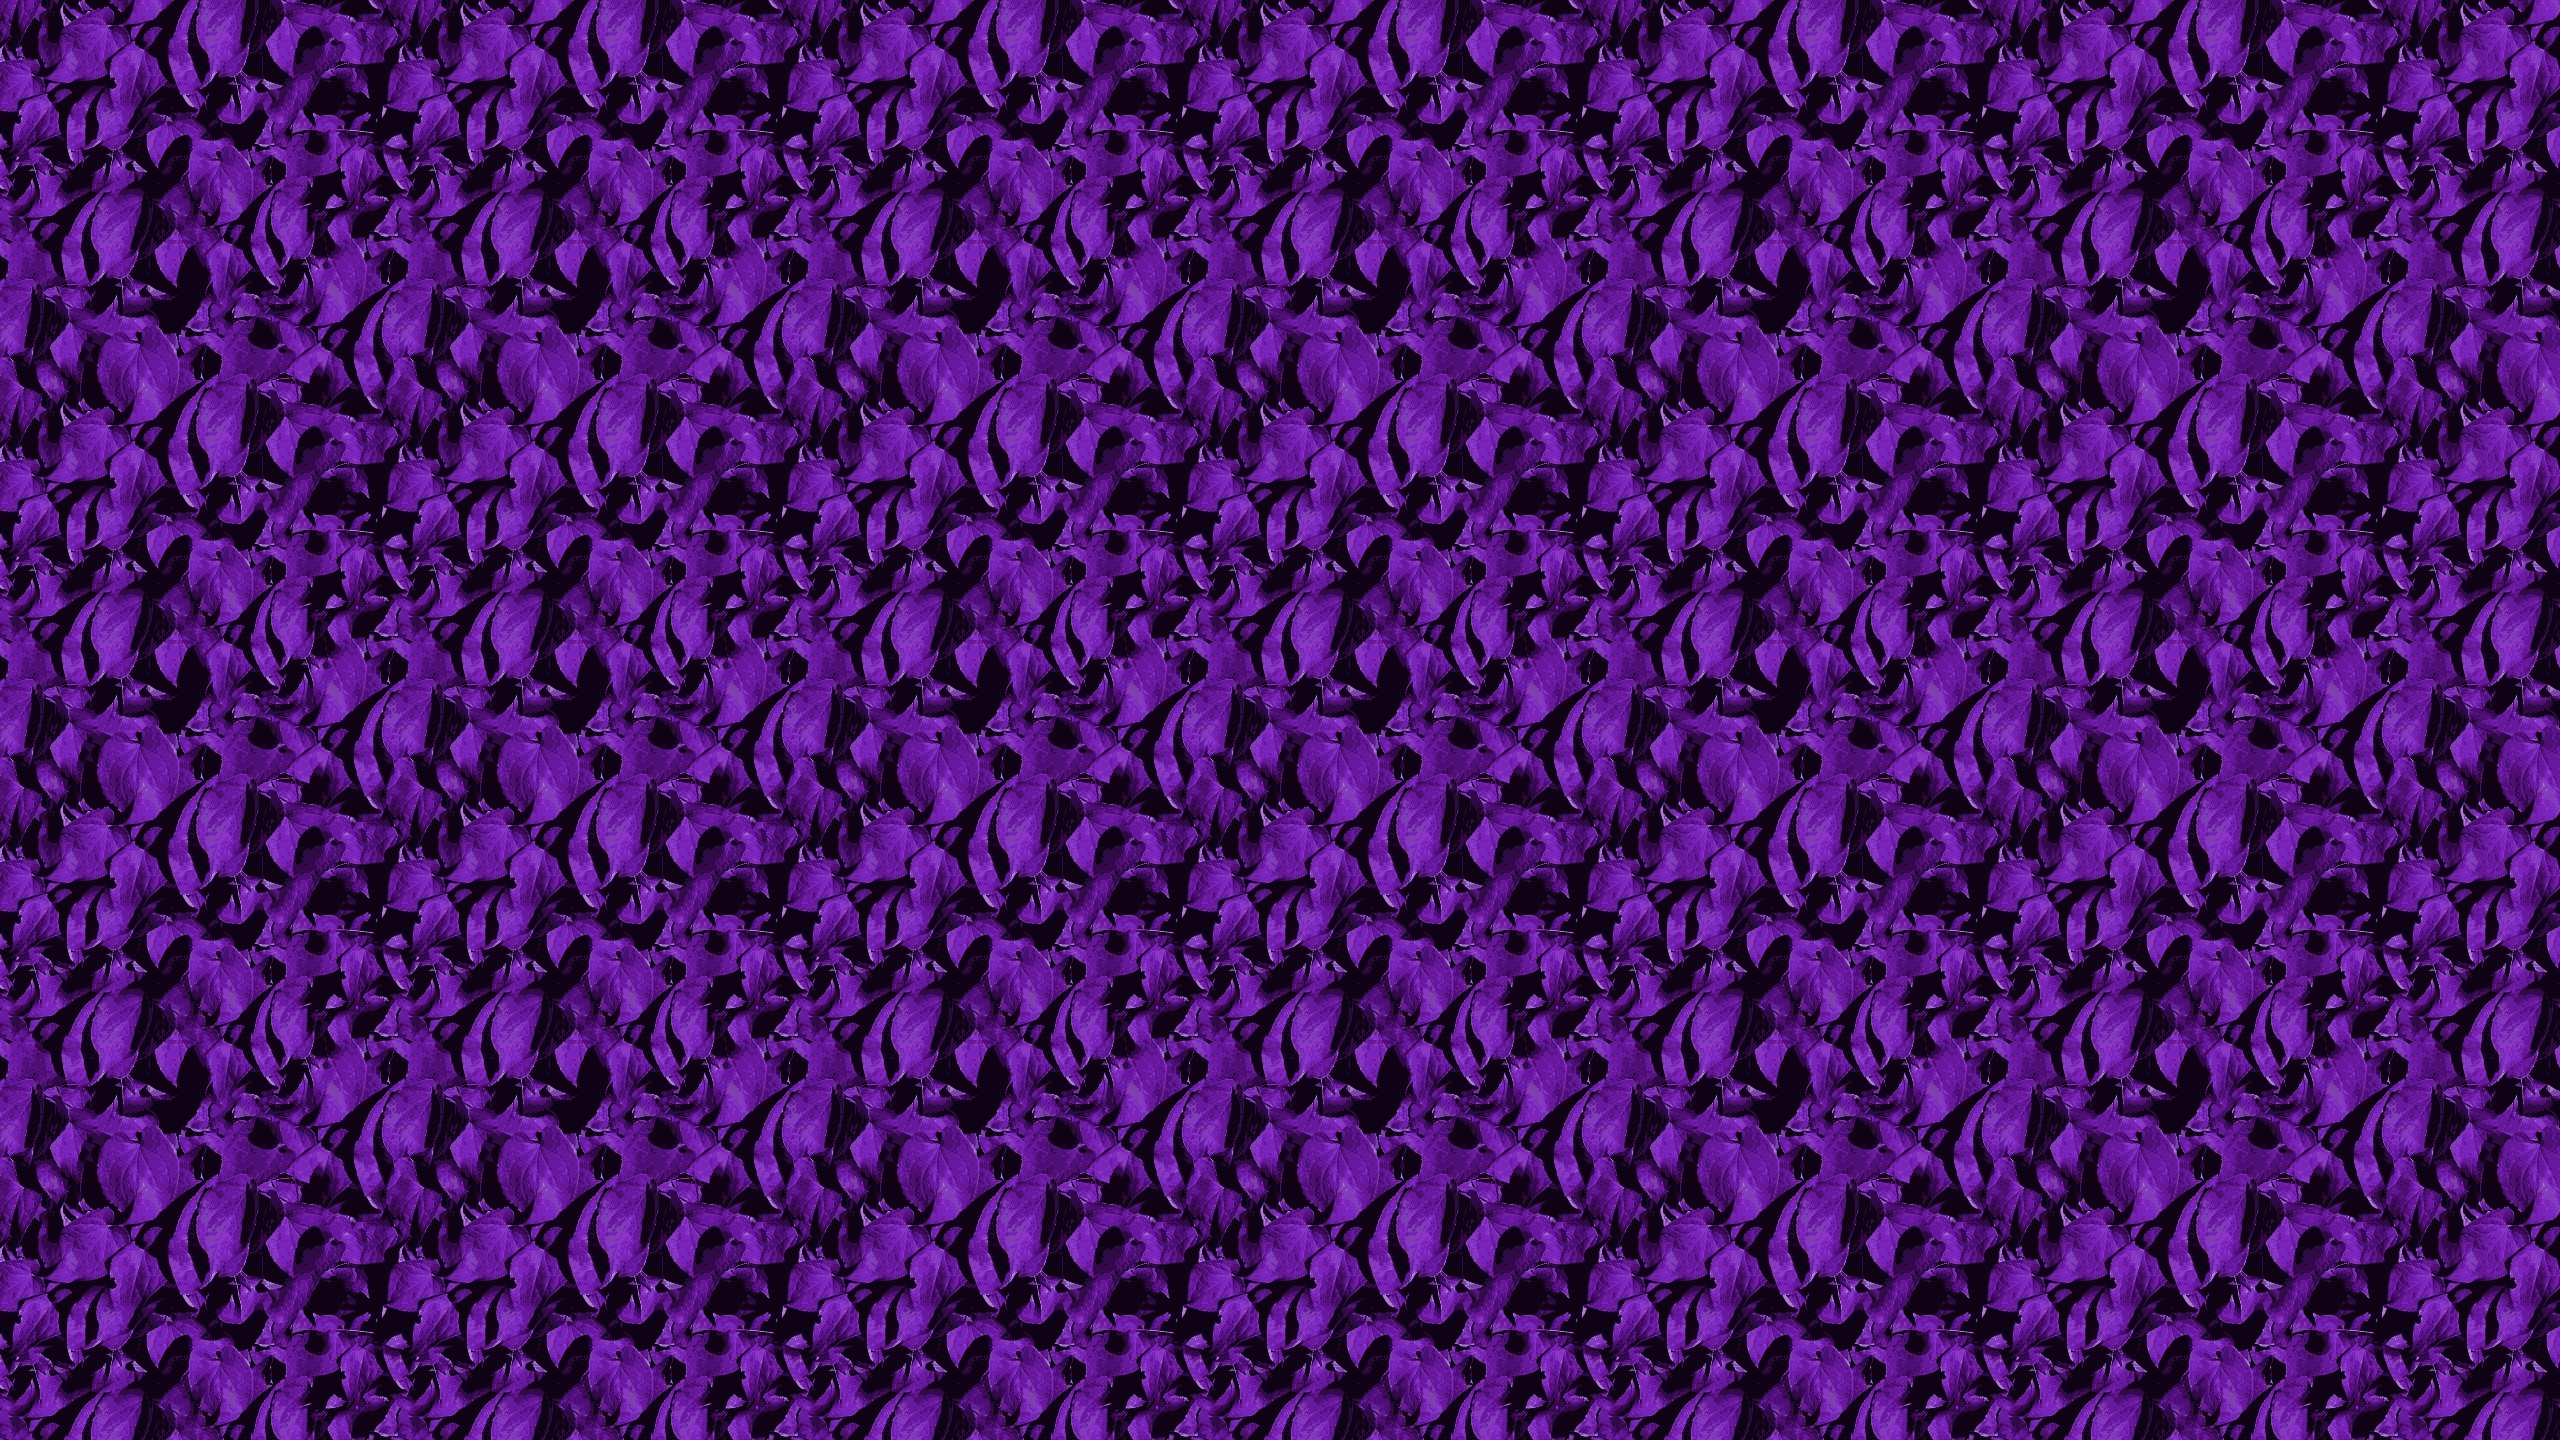 2560x1440, Purple Paisley Wallpaper - Purple Paisley Background - HD Wallpaper 